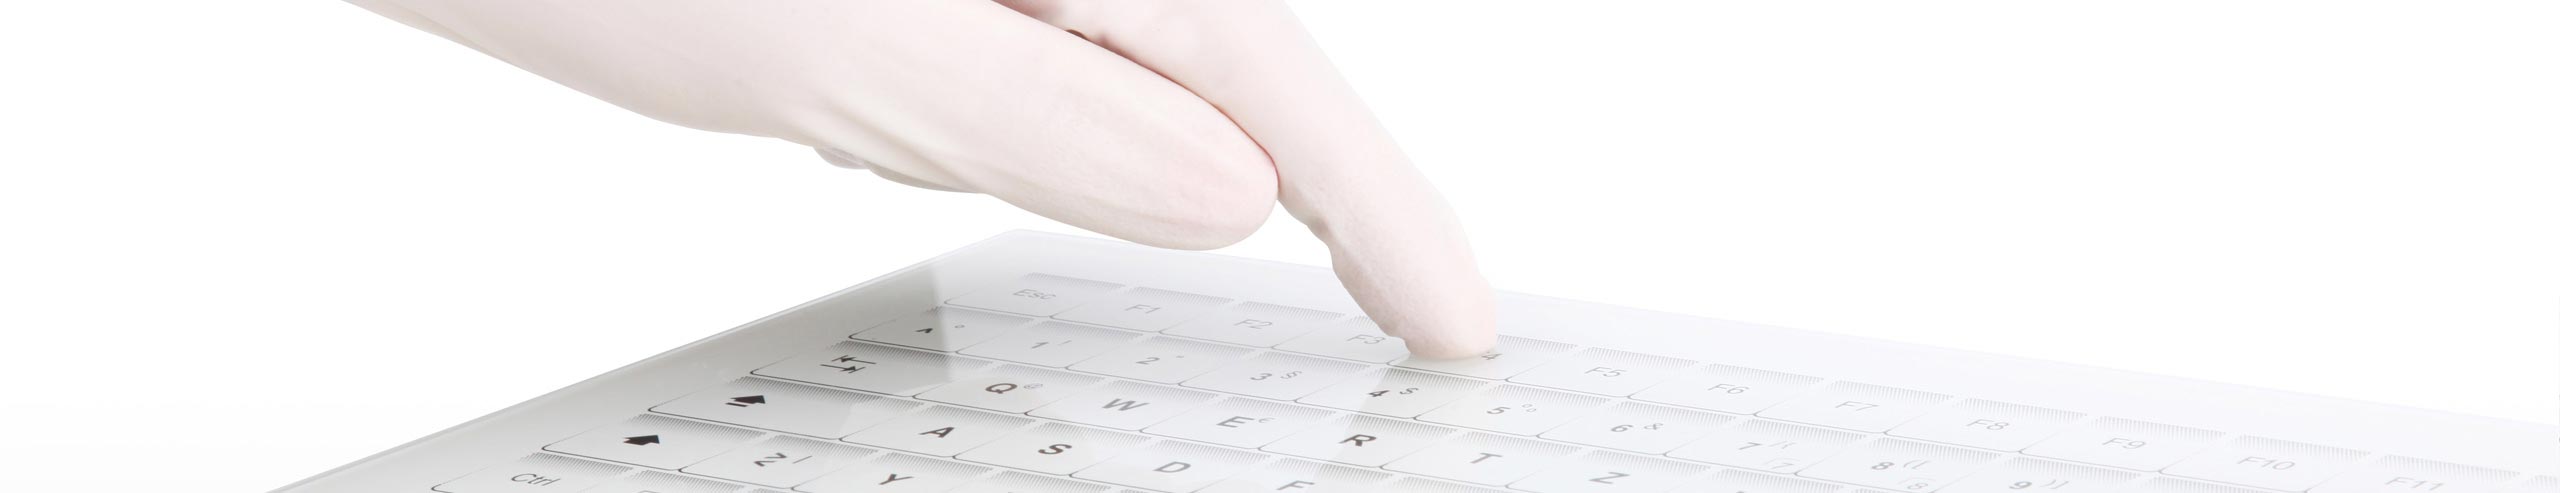 Kapazitive Glastastatur - Medizinische Tastatur, Hygienetastatur